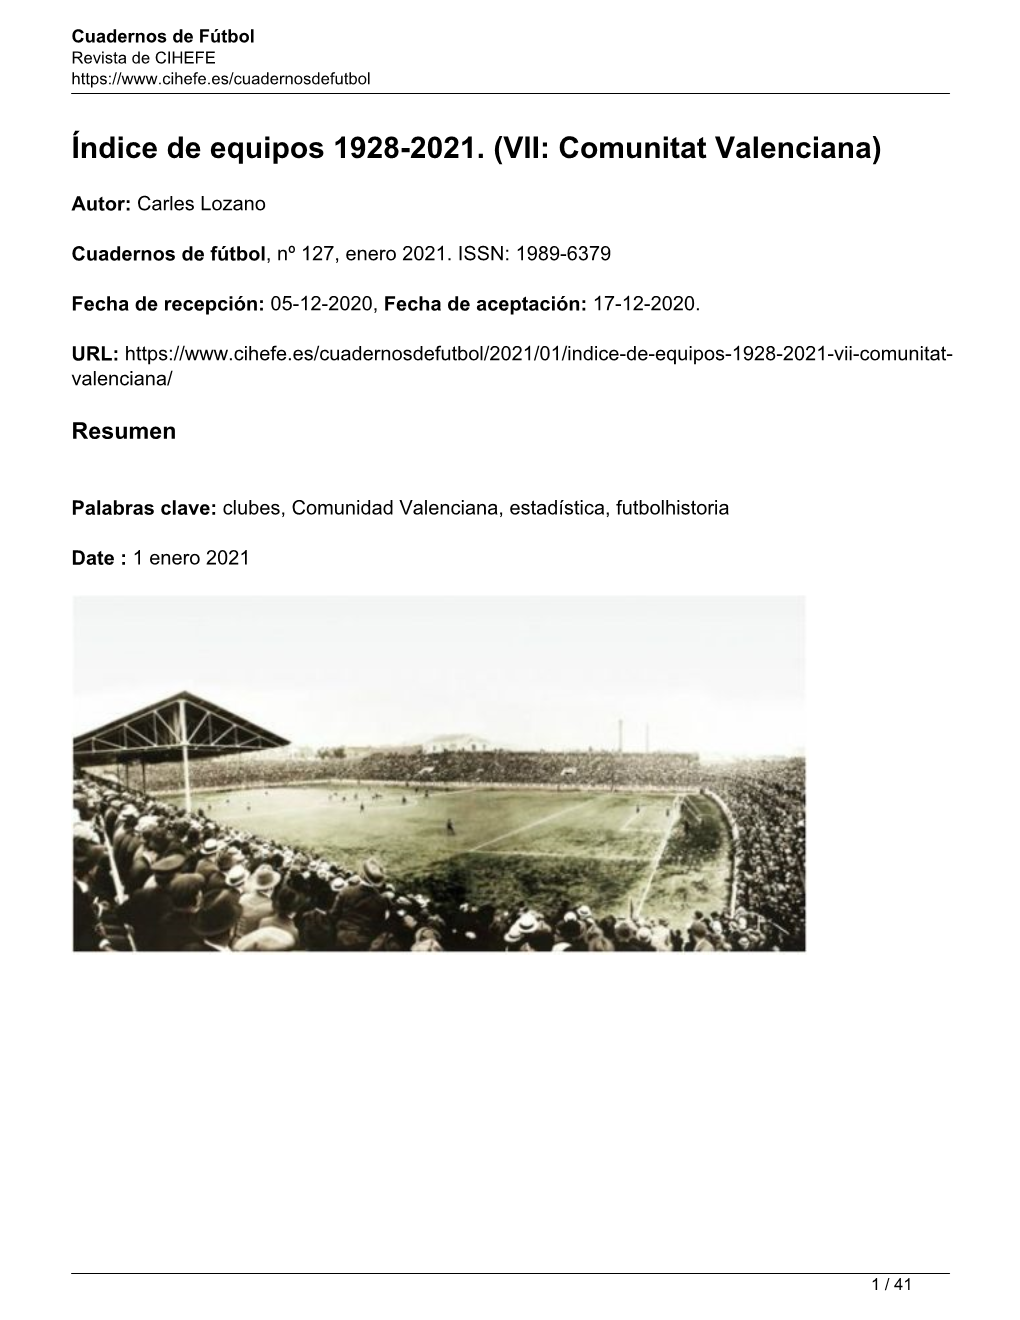 Índice De Equipos 1928-2021. (VII: Comunitat Valenciana)